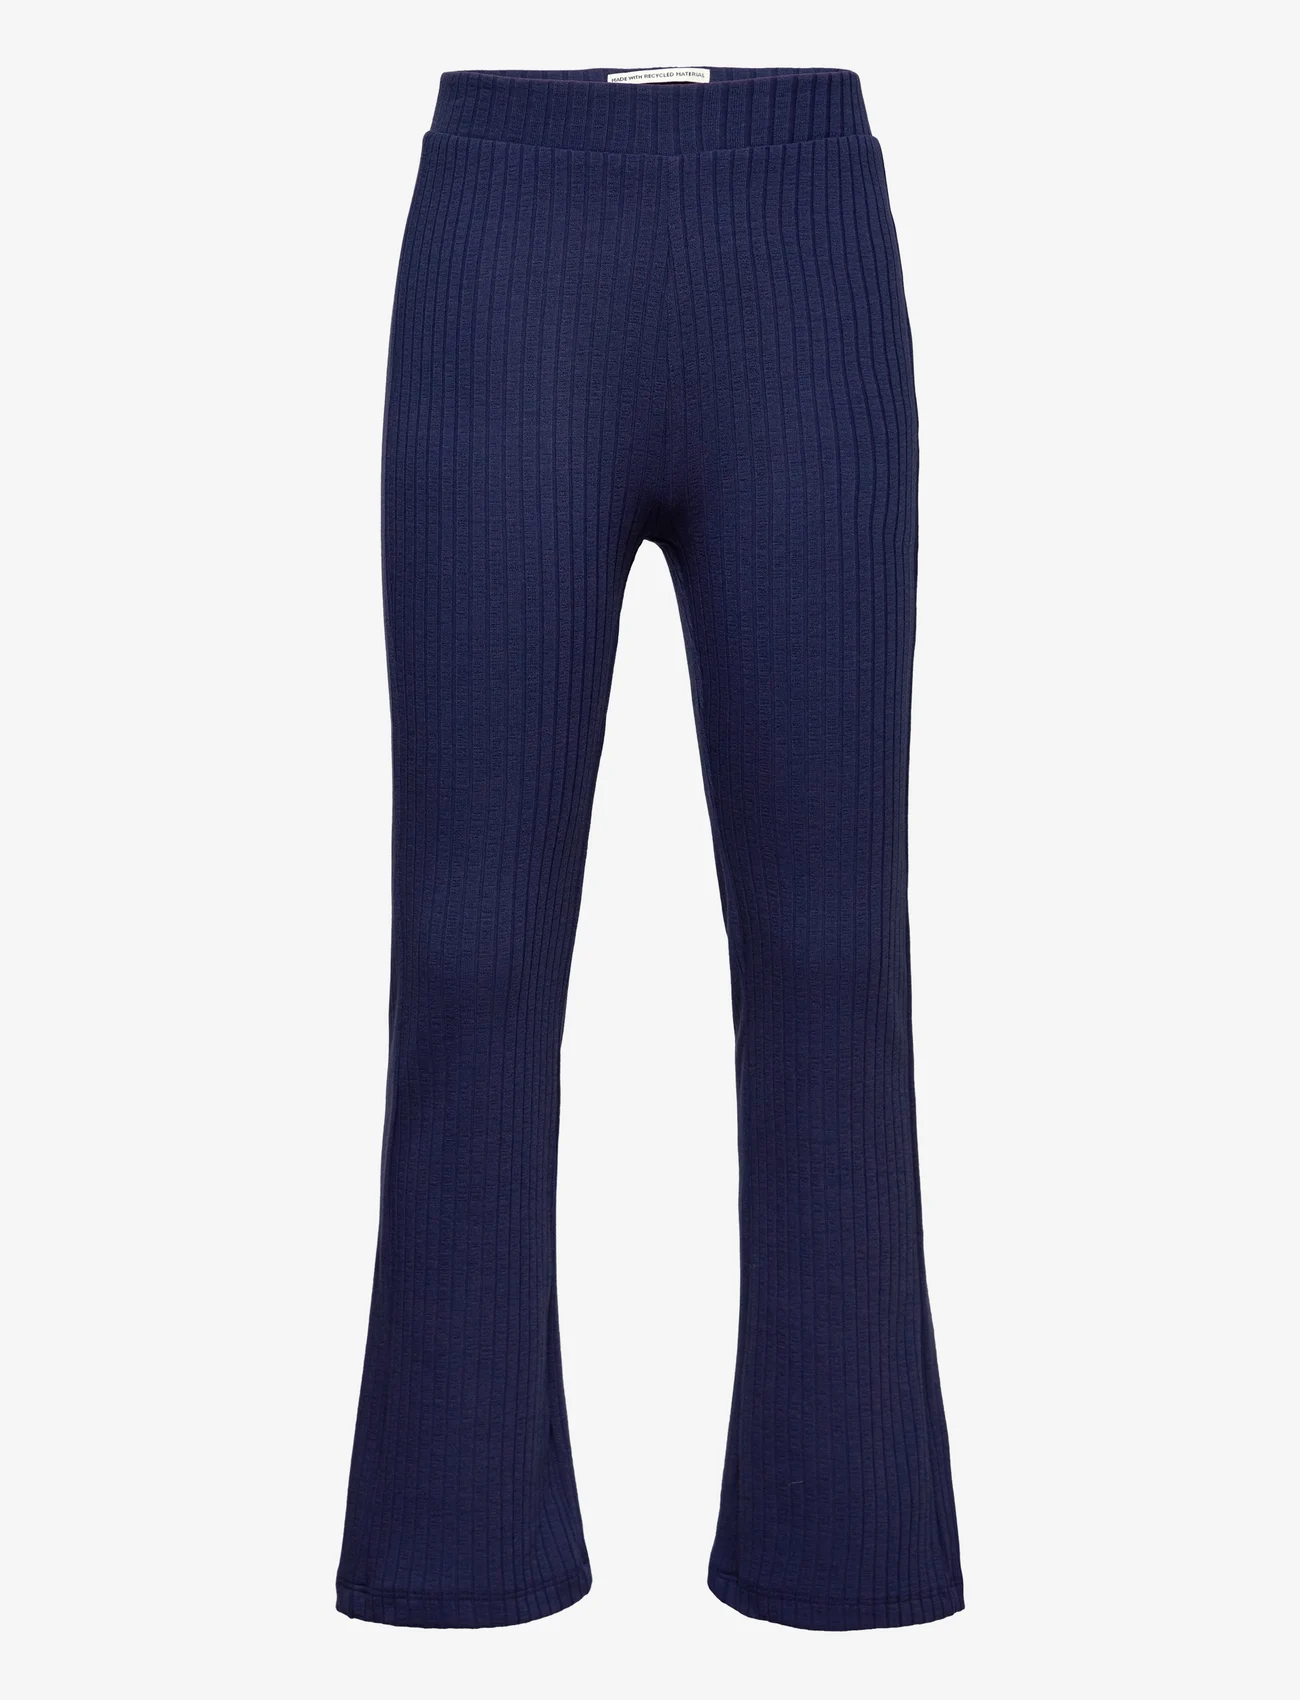 Tom Tailor - flared rib leggings - kaufen nach alter - dark blueberry - 0